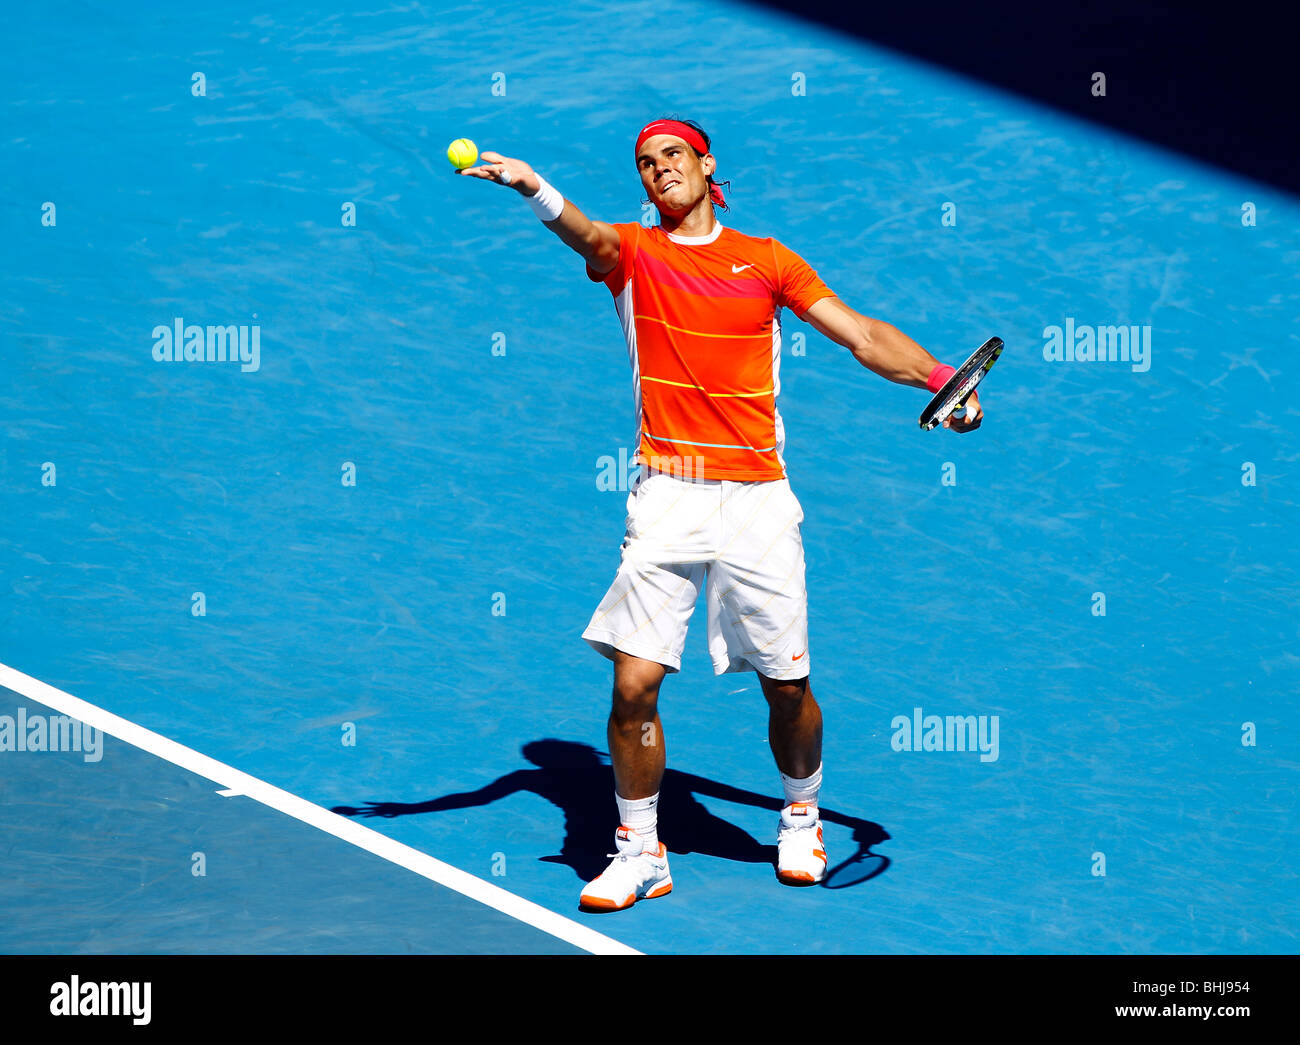 Rafael Nadal of Spain at the Australian Open 2010 in Melbourne, Australia  Stock Photo - Alamy